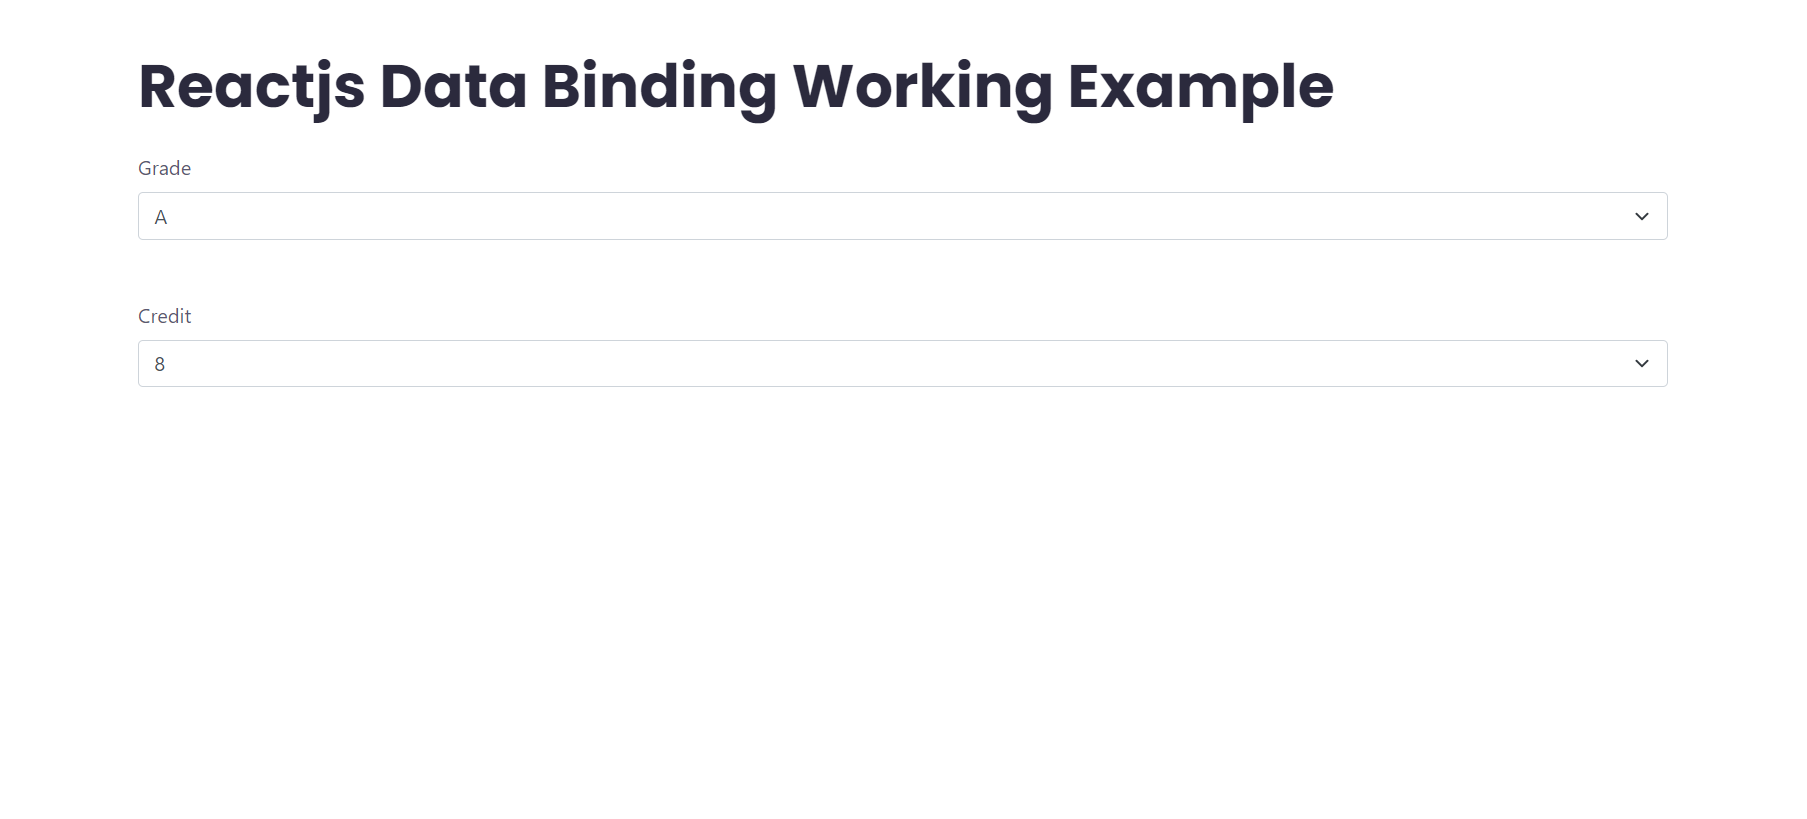 Reactjs Data Binding Working Example